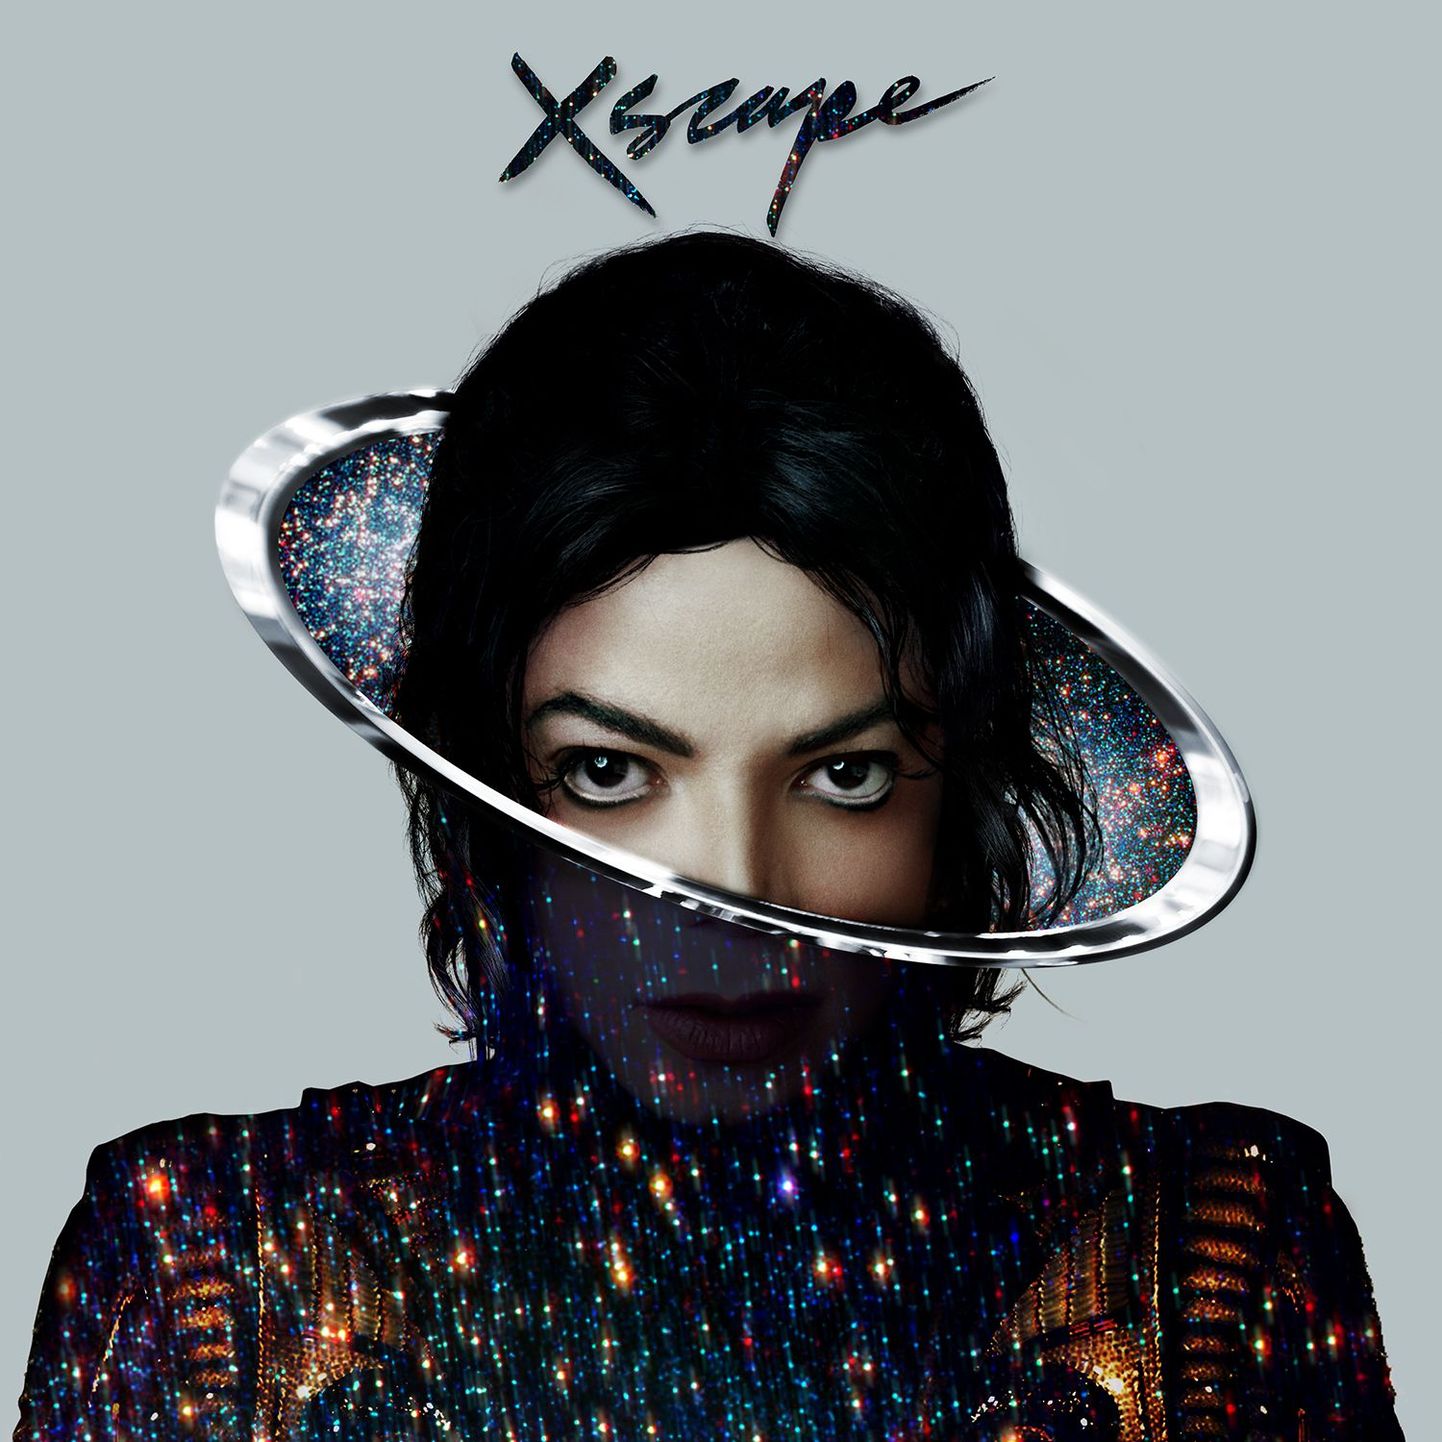 Голограмма исполнила песню Slave to the Rhythm, трек с посмертного альбома артиста Xscape.